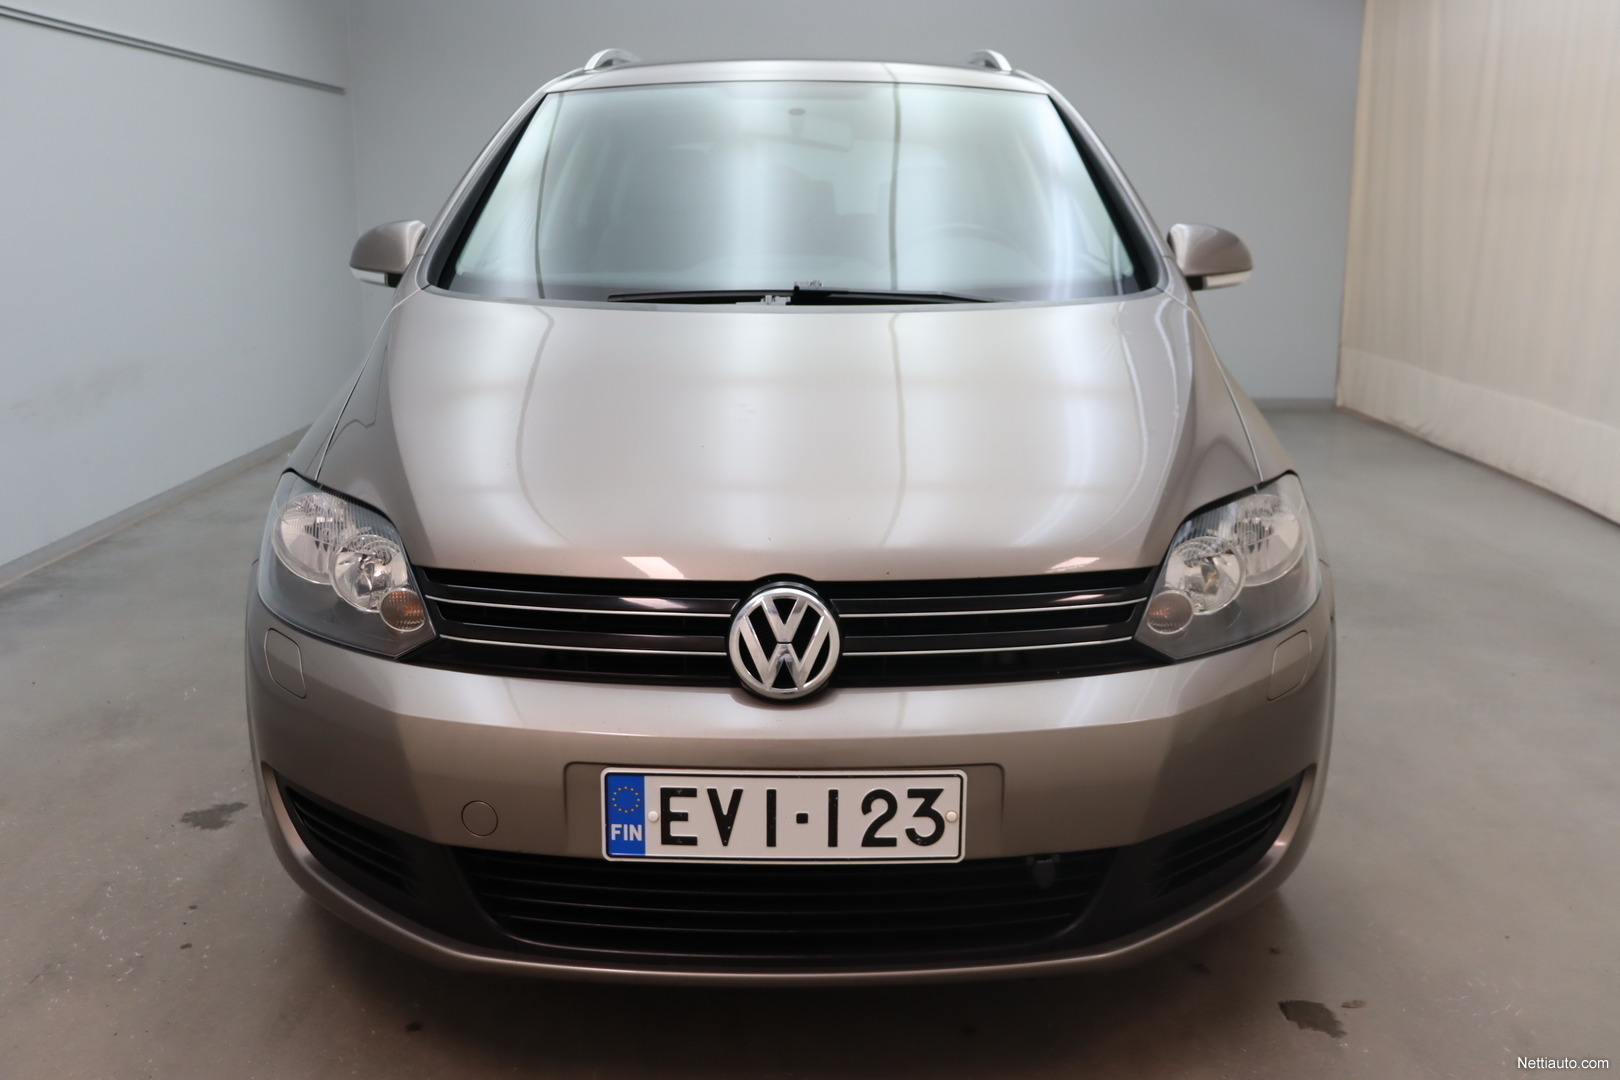 Volkswagen Golf Plus Comfortline 1,4 TSI 90 kW (122 hv) DSG-automaatti -  Autohuuma korkotarjous 0,88% + kulut - Hatchback 2011 - Used vehicle -  Nettiauto